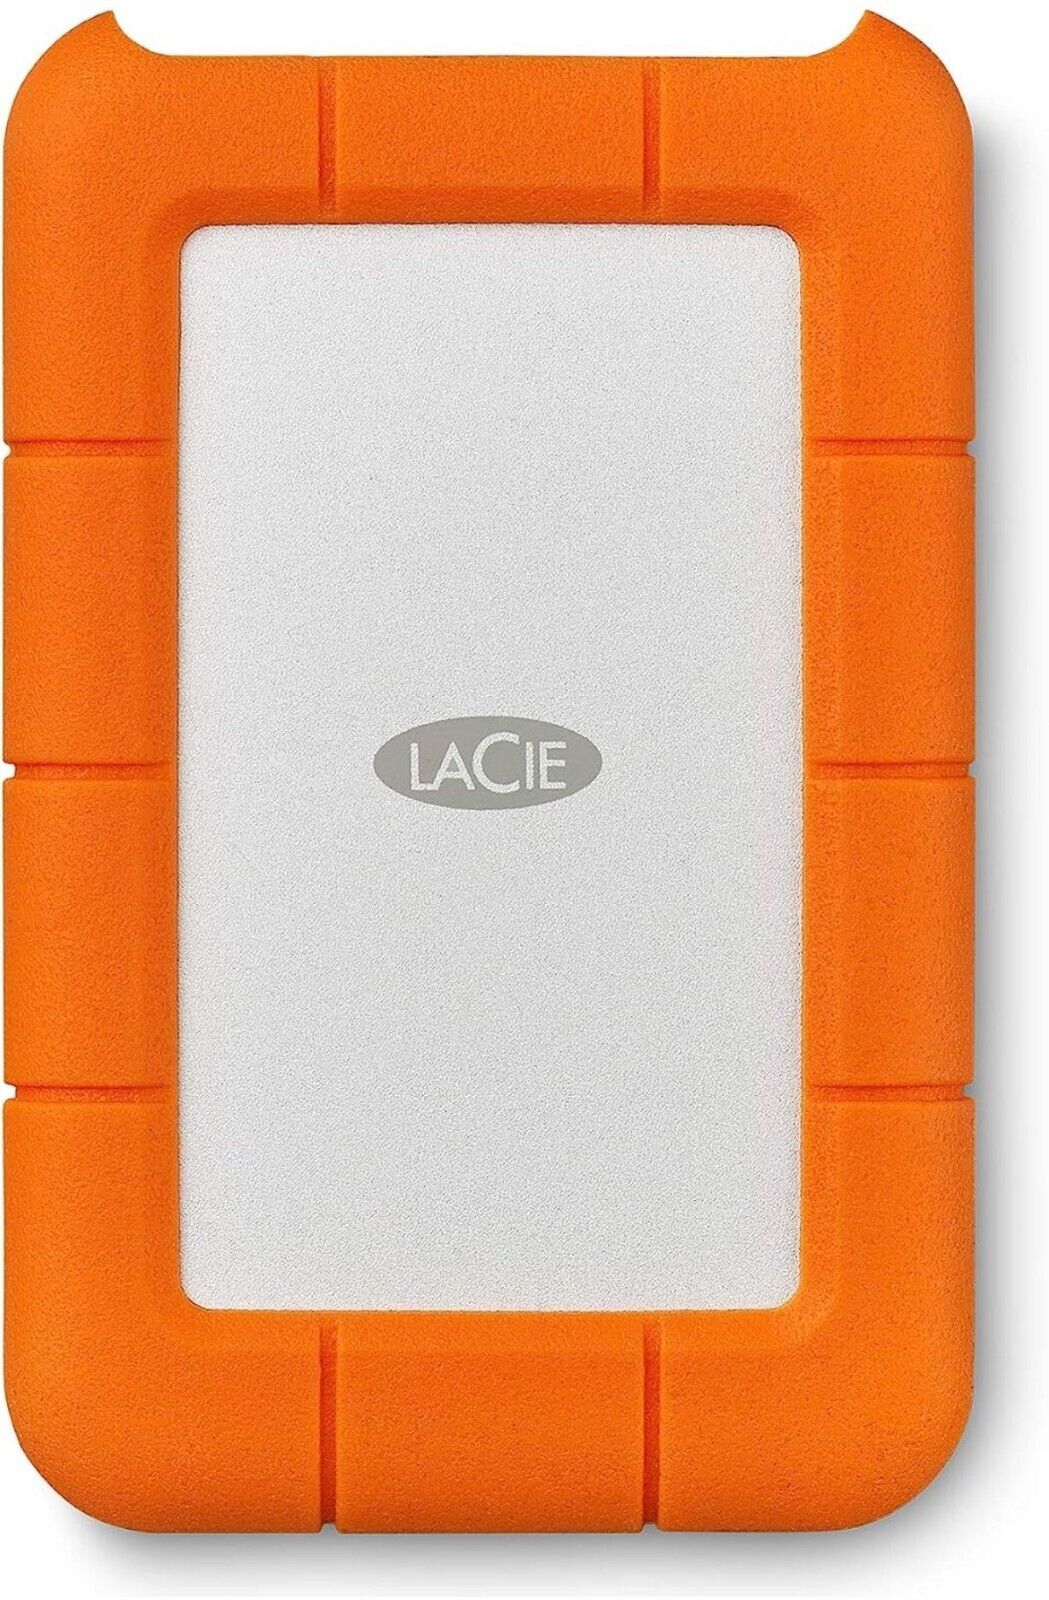 Lacie Rugged Mini 2TB External hard drive Portable